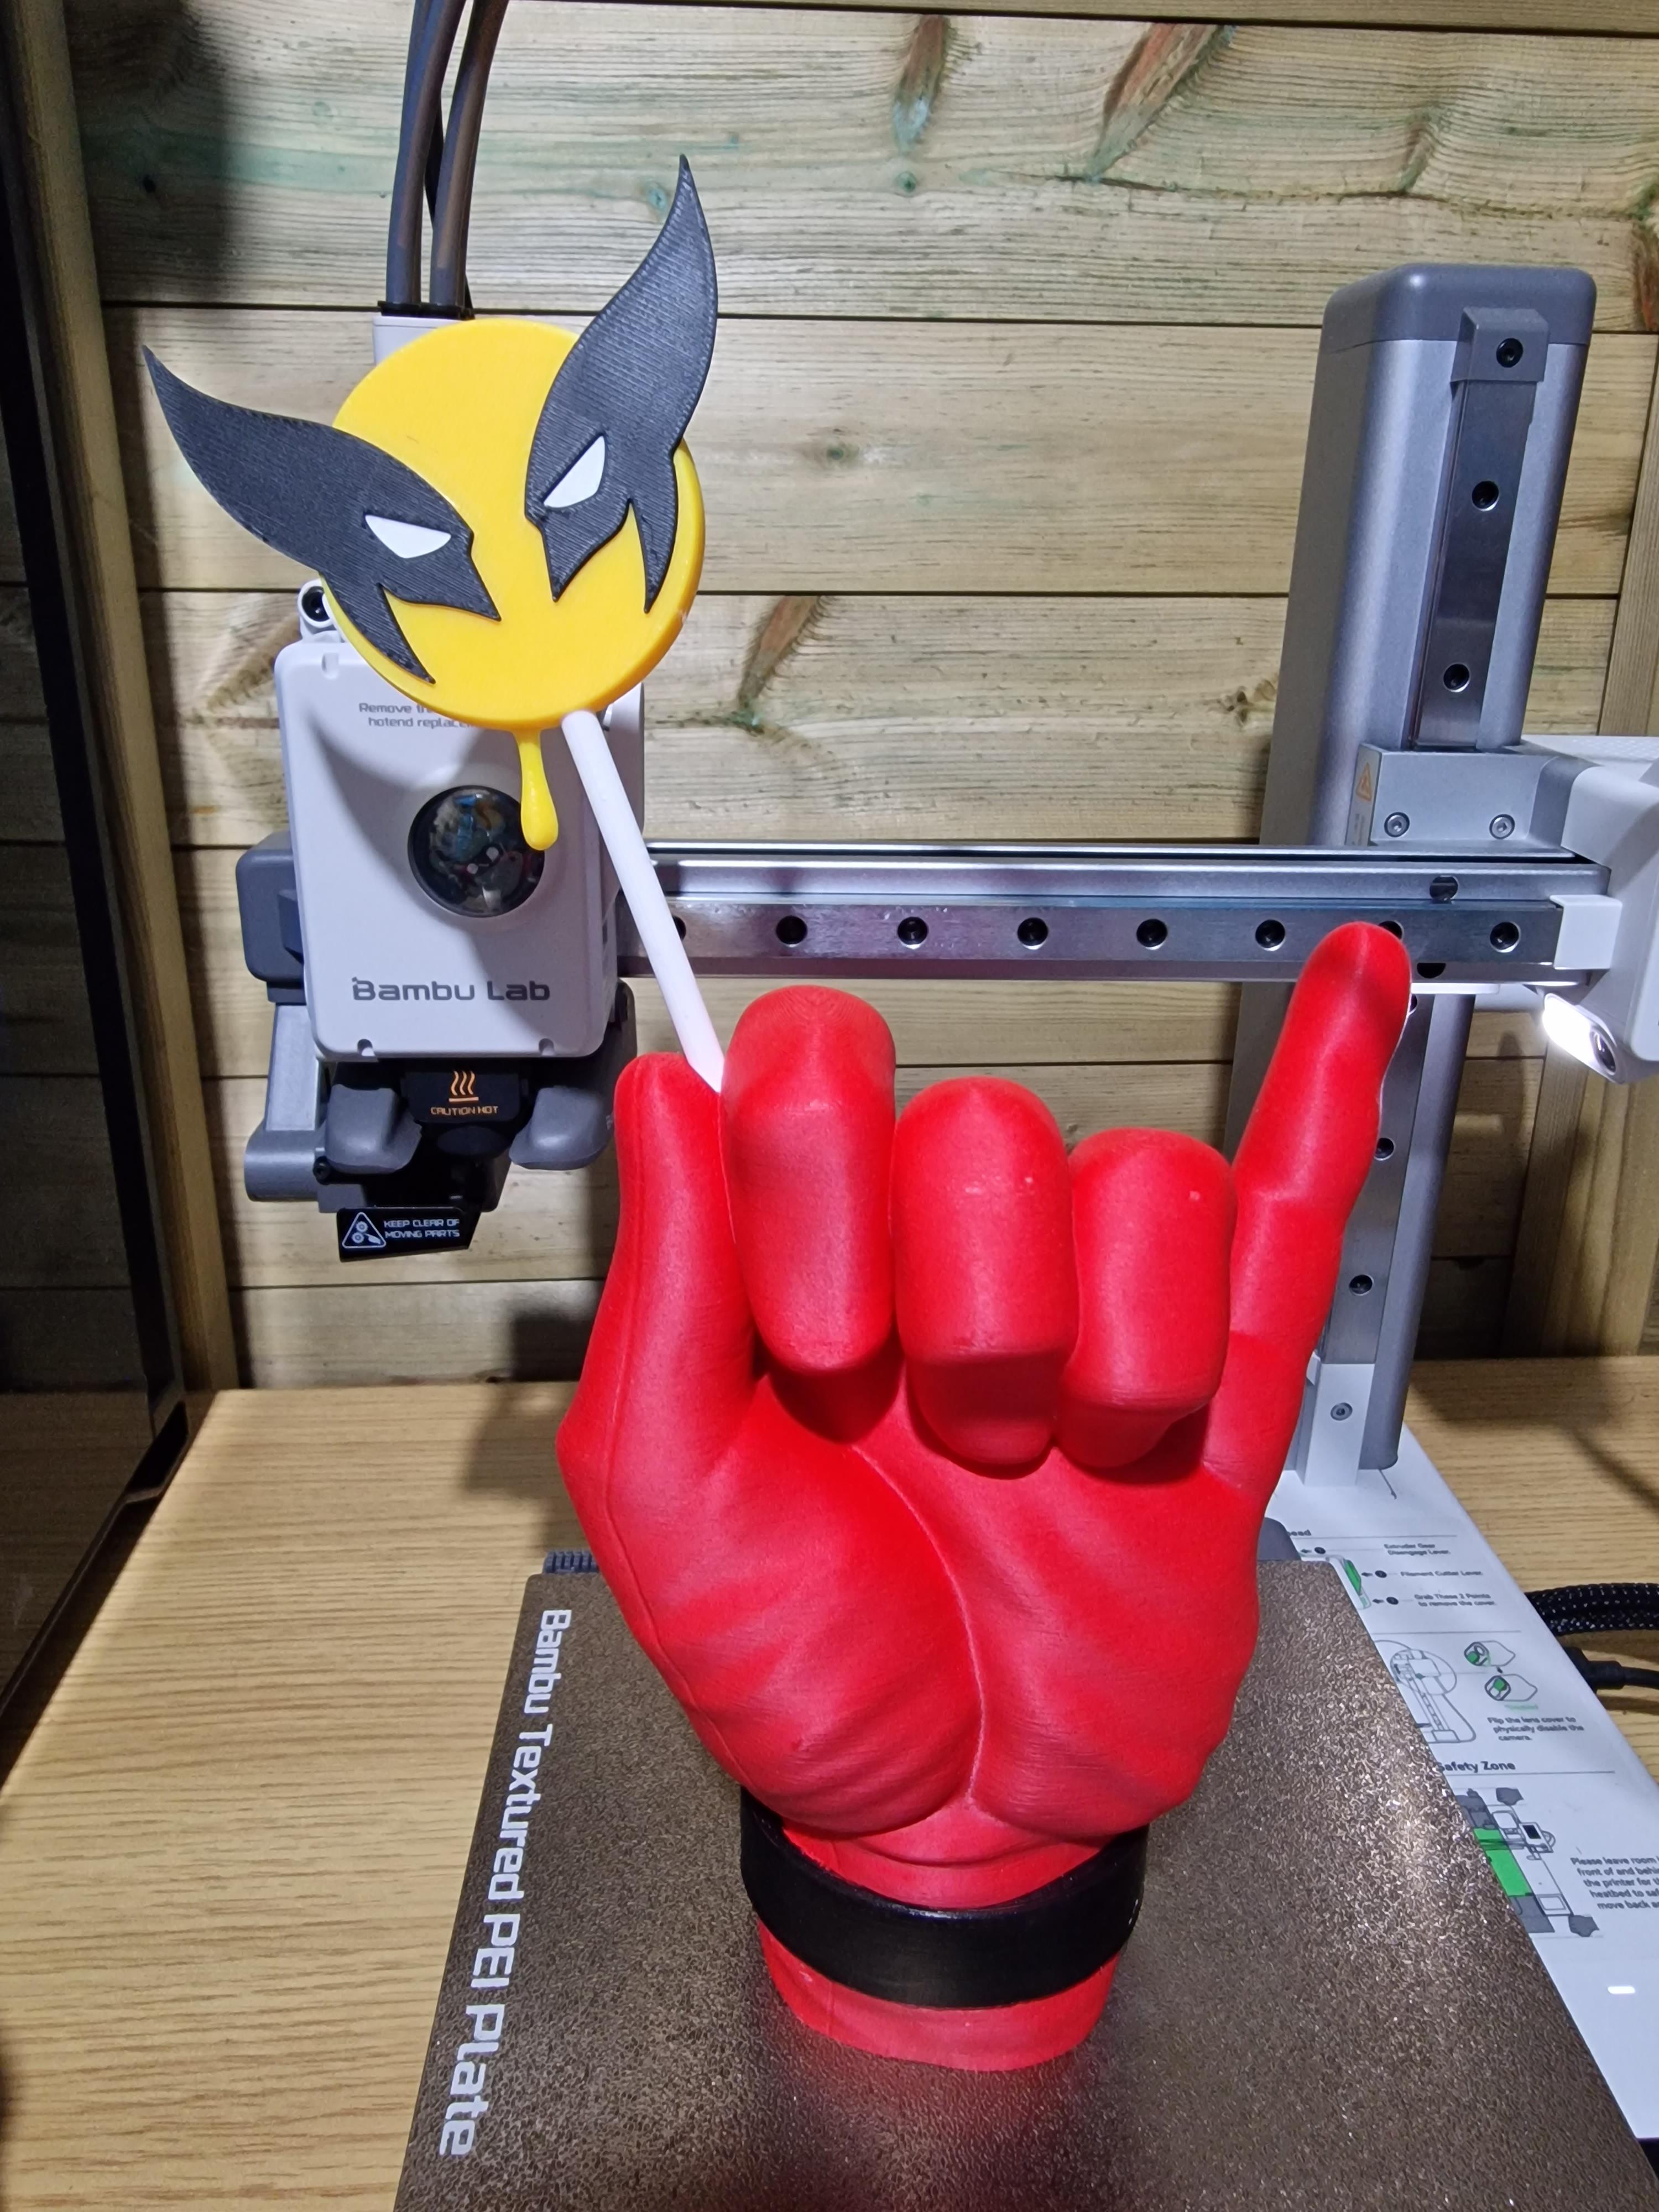 Deadpool Hand 3d model